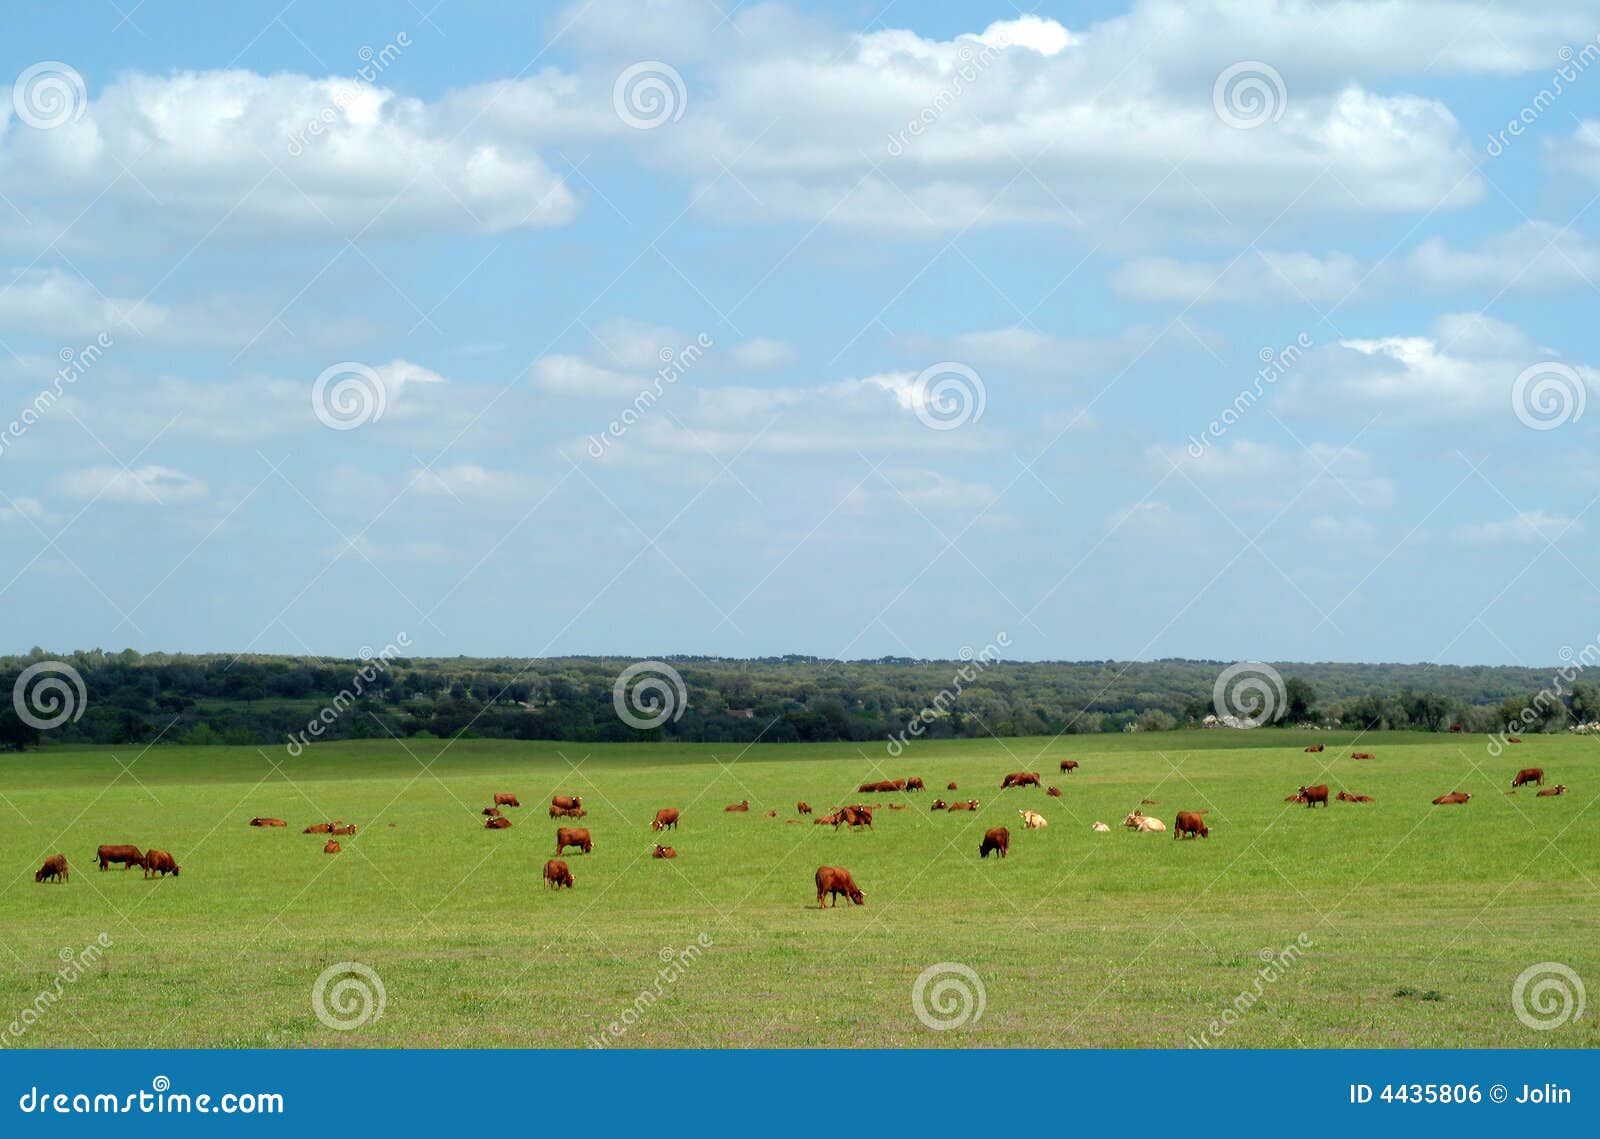 cows graze in a green grass field